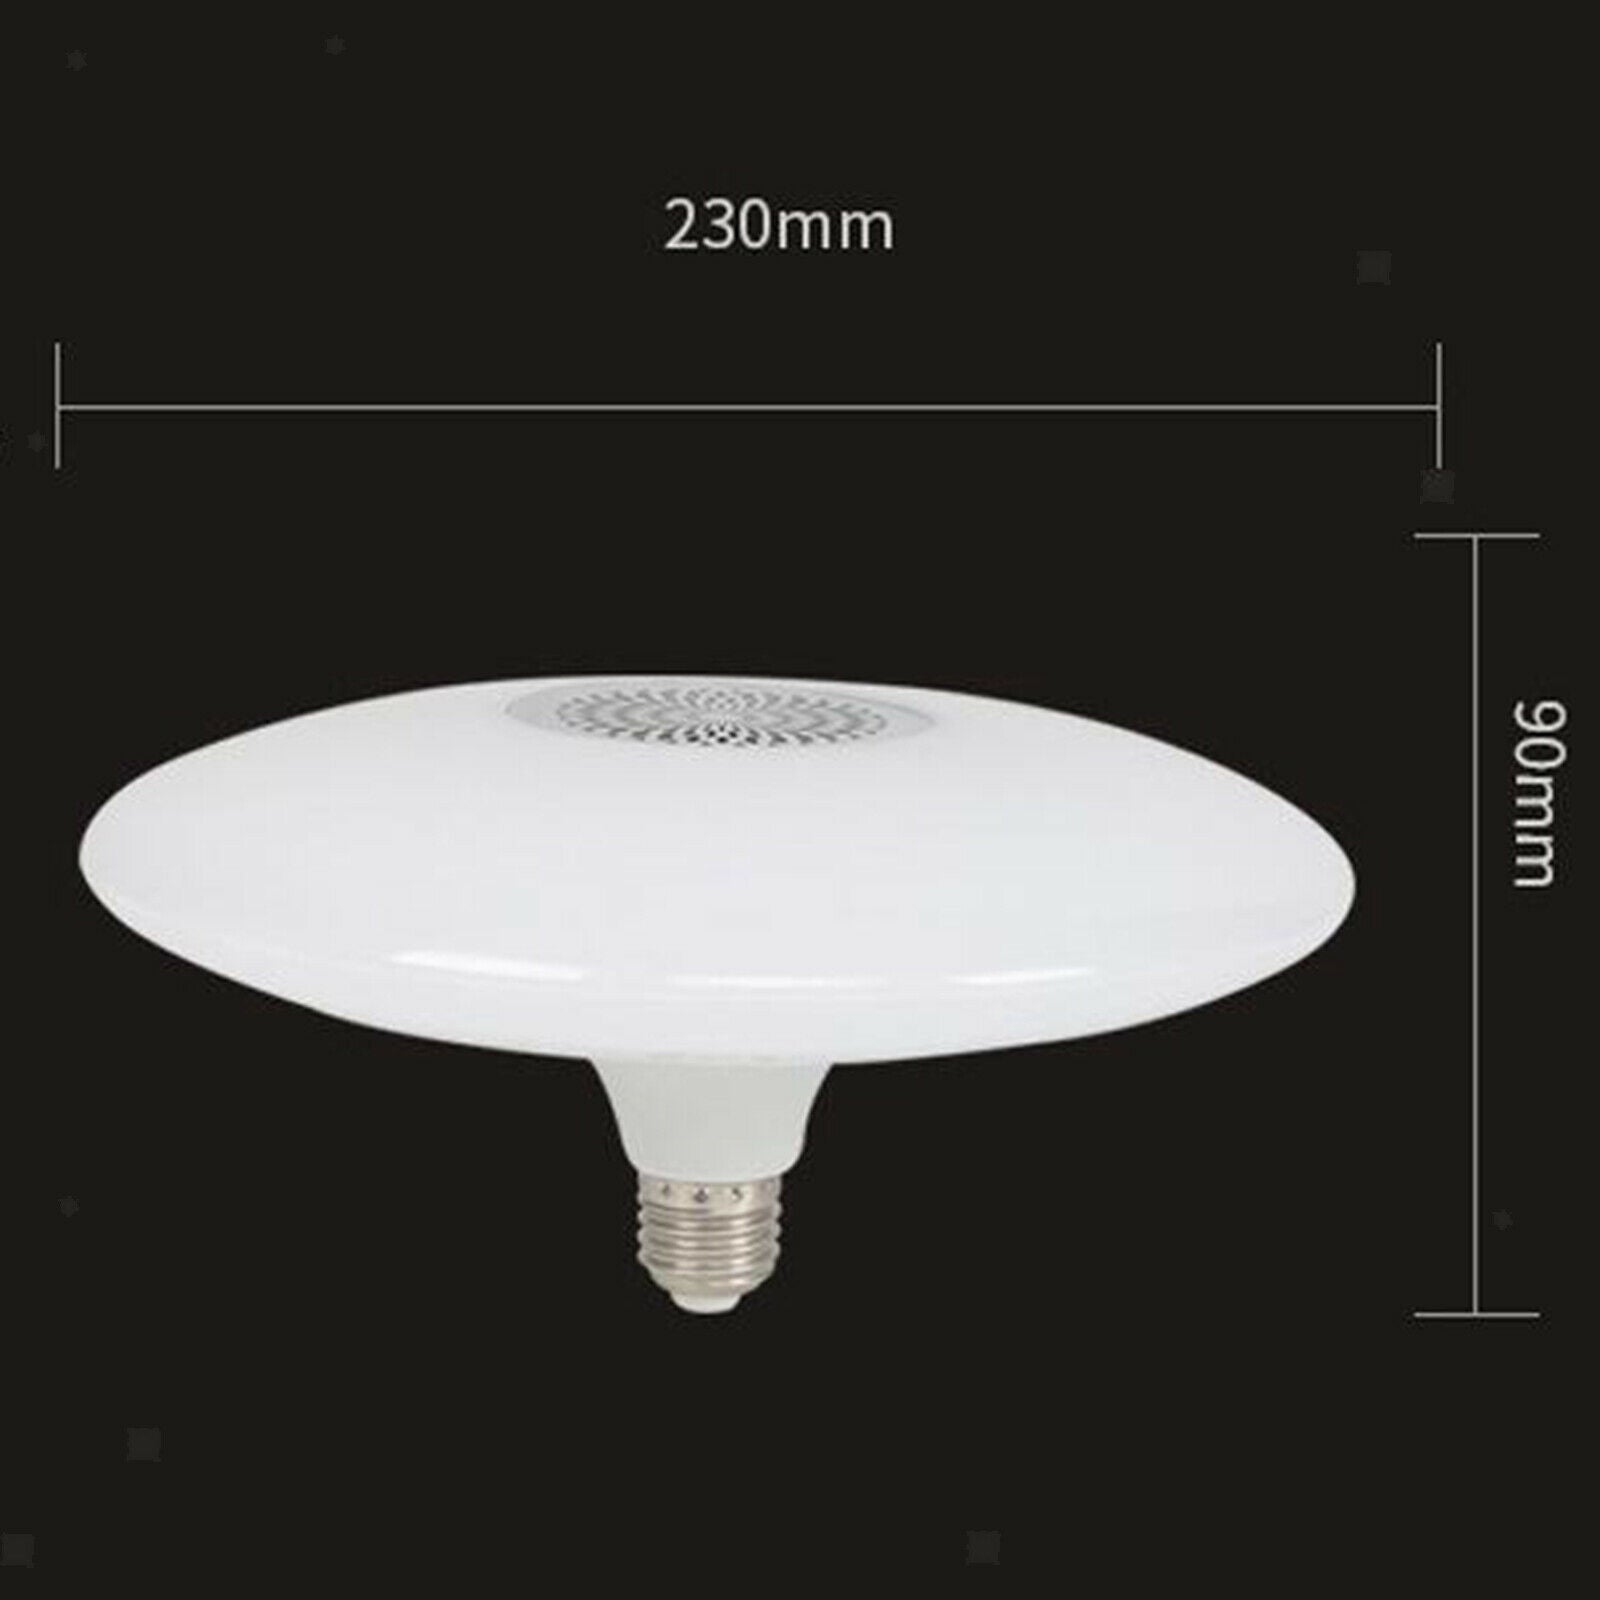 Smart Bulb E27 Base Bluetooth Speakers Remote Controlled LED Light Bulb